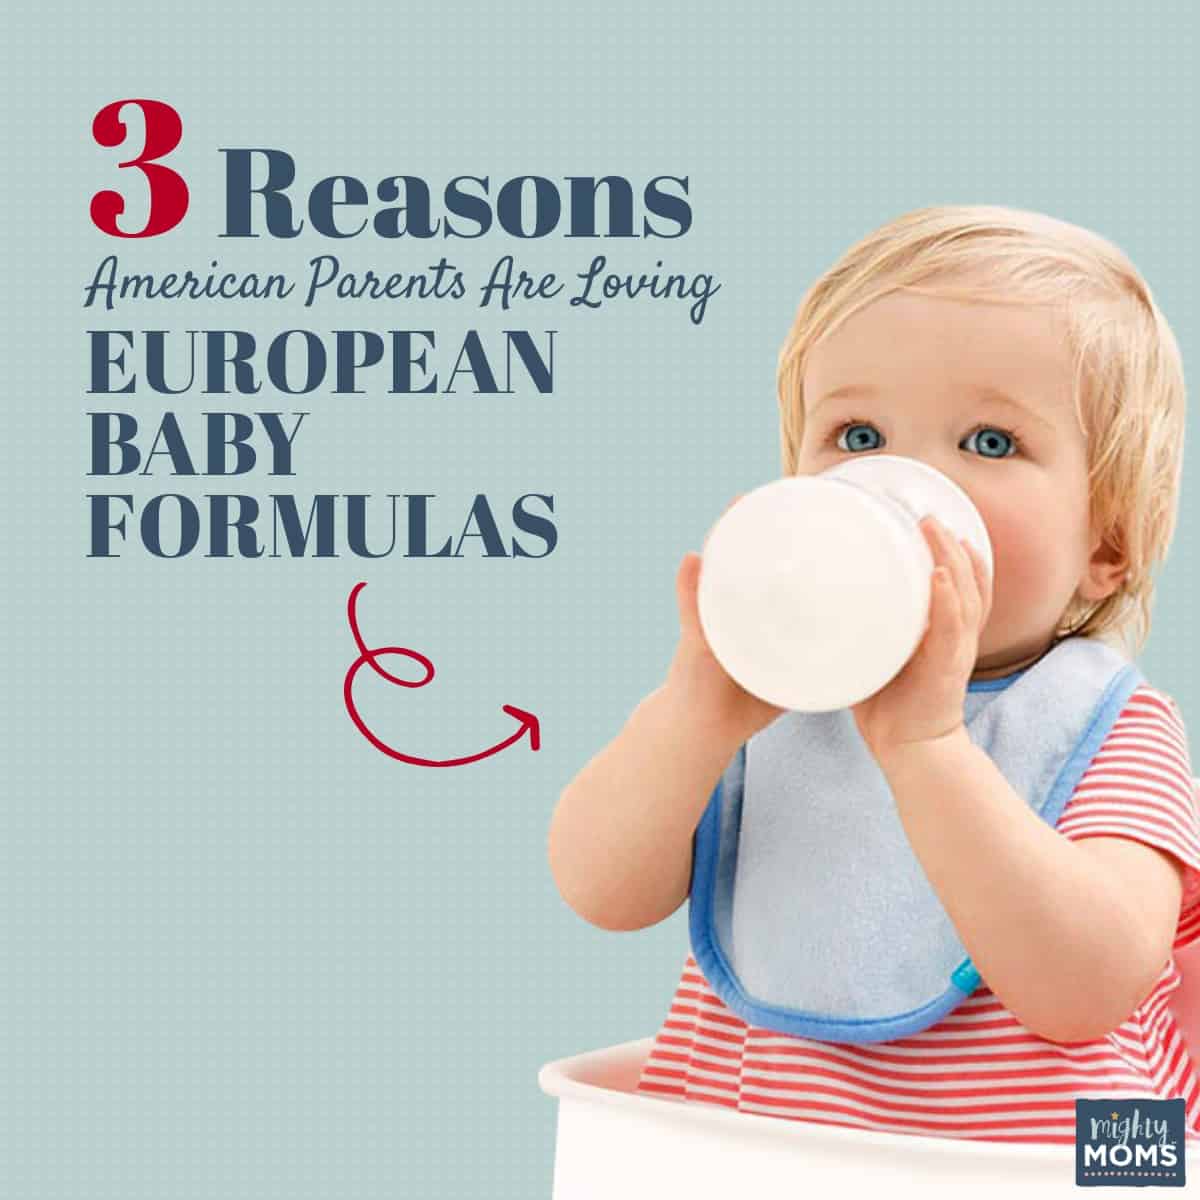 European baby formula